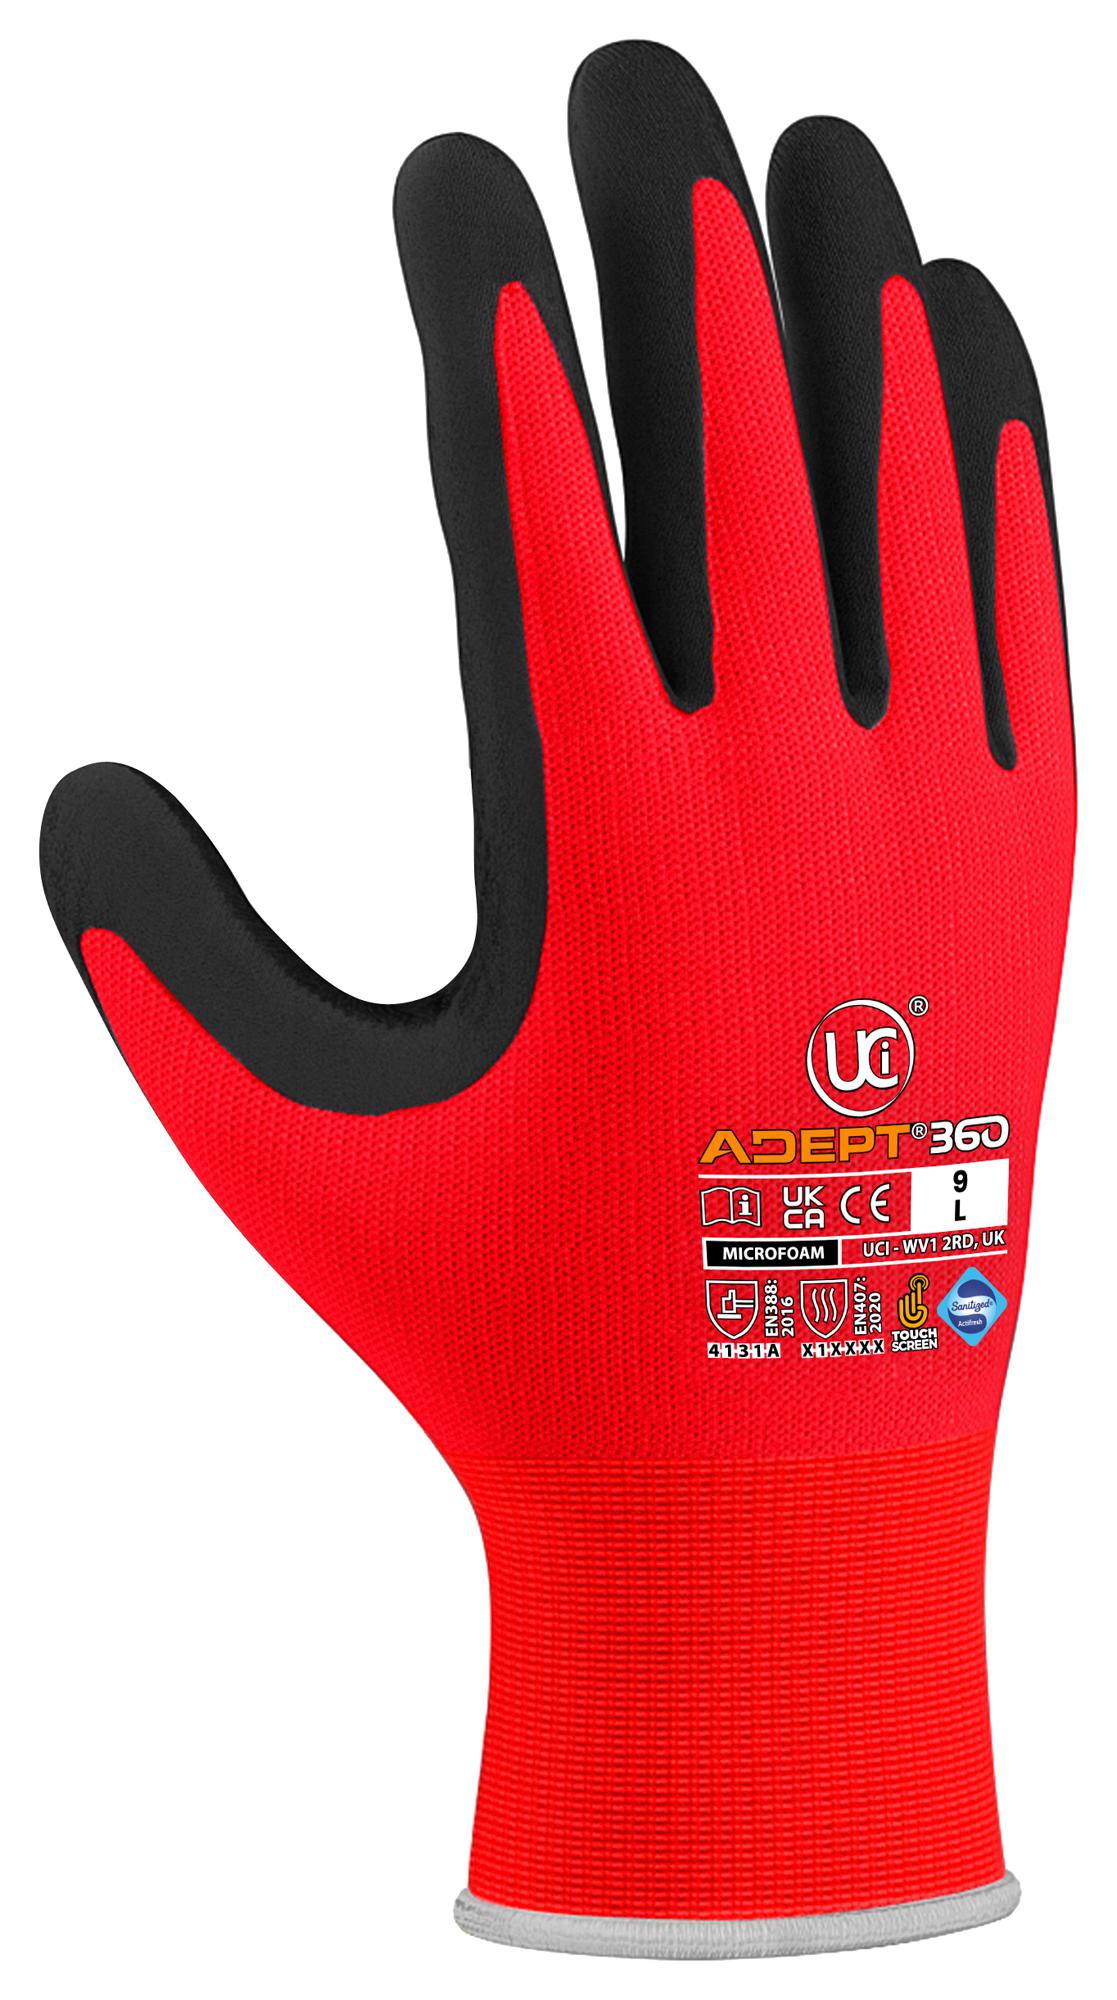 Uci G/adept360-Red/09 Gloves, Nylon/spandex, Red, L